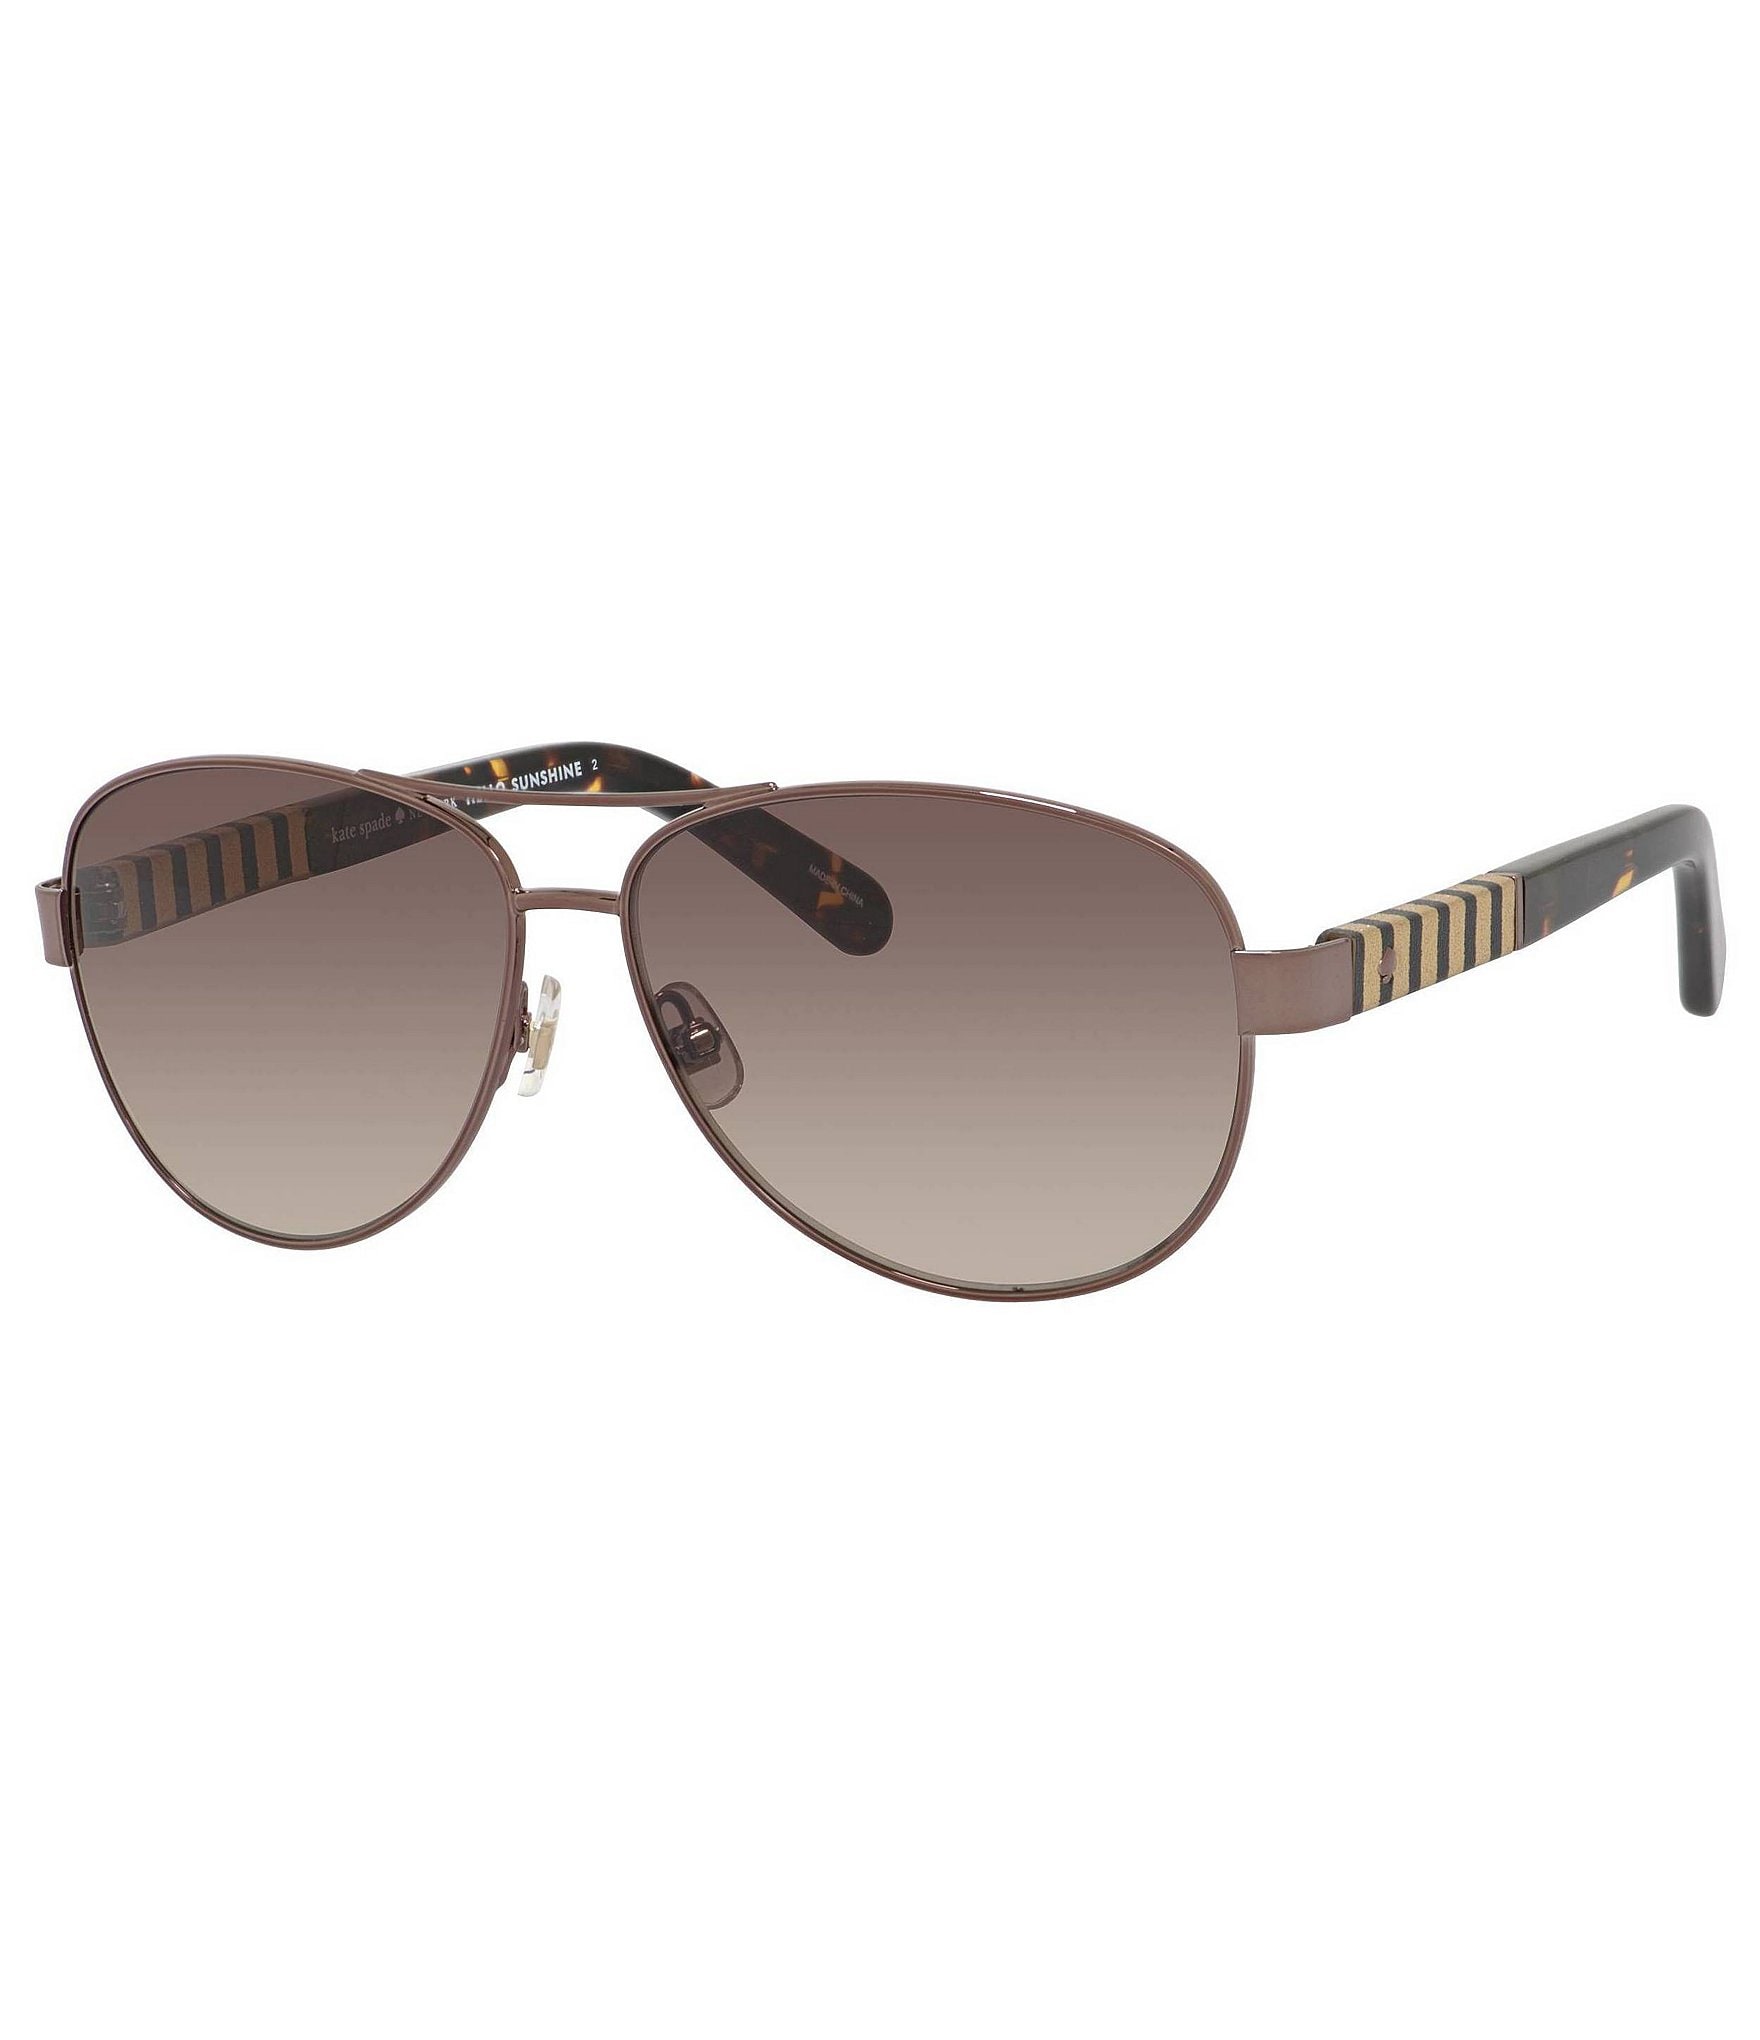 kate spade sunglasses: Women's Aviator Sunglasses | Dillard's